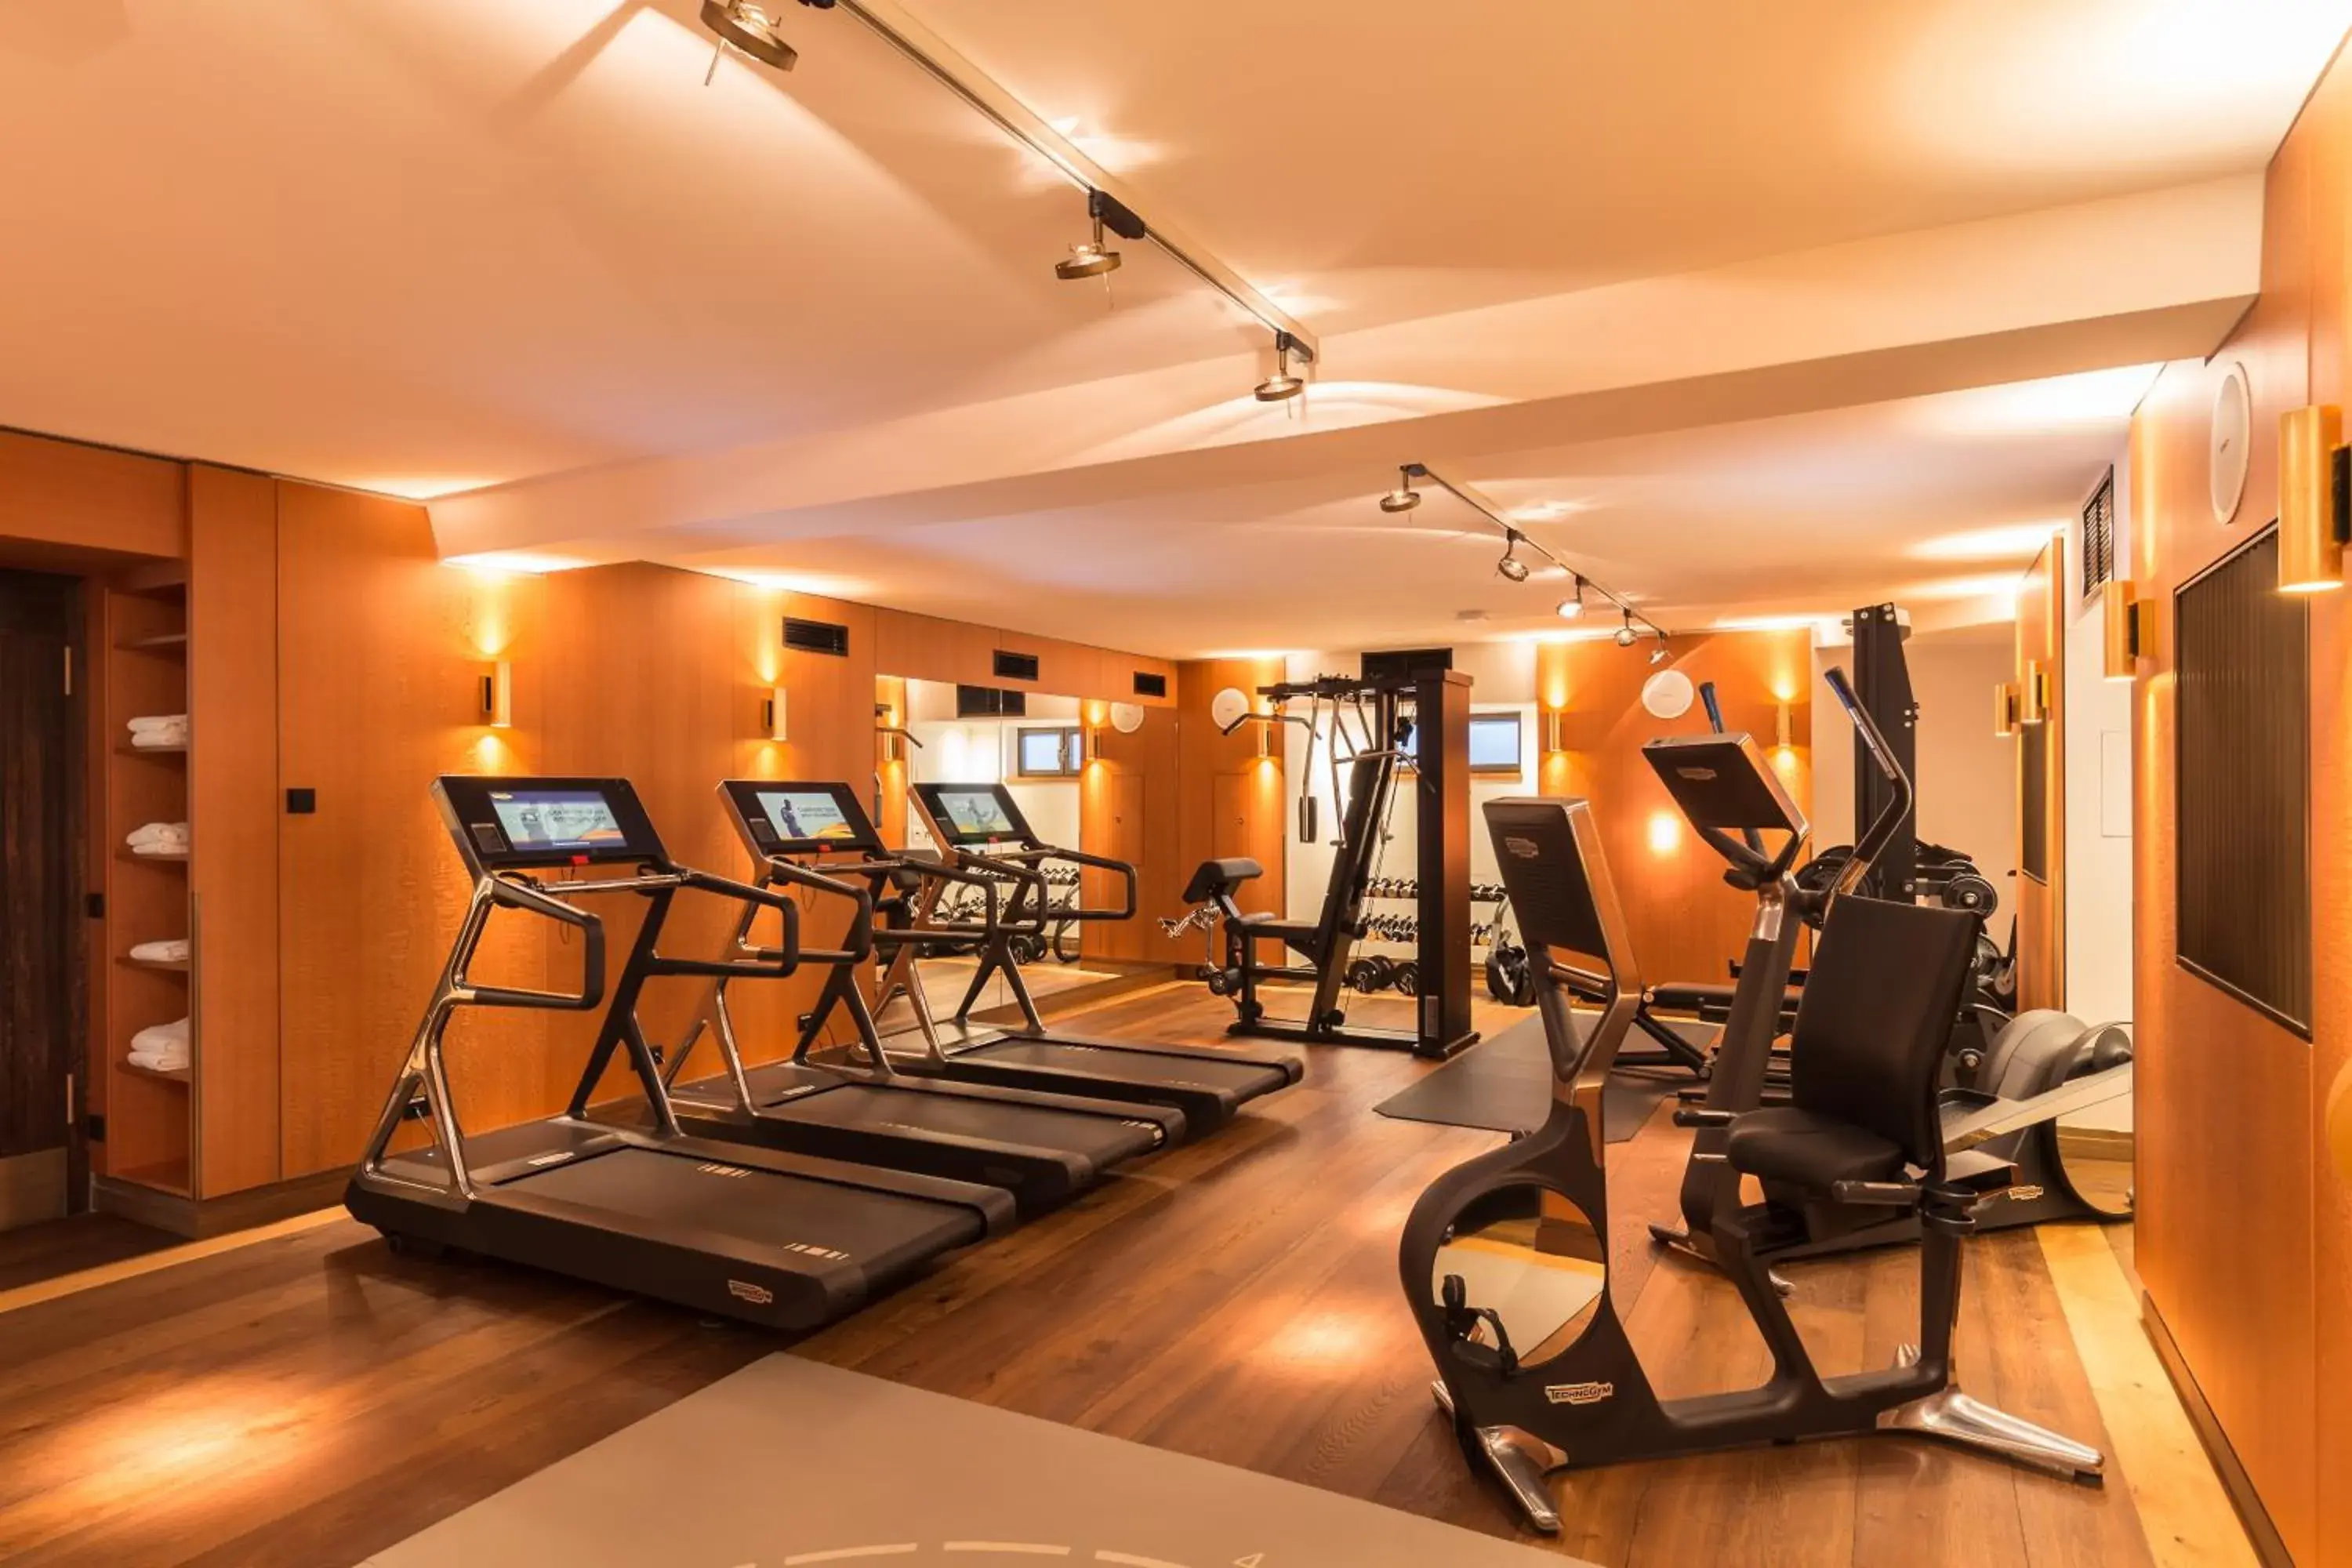 Fitness centre/facilities, Fitness Center/Facilities in Orania.Berlin